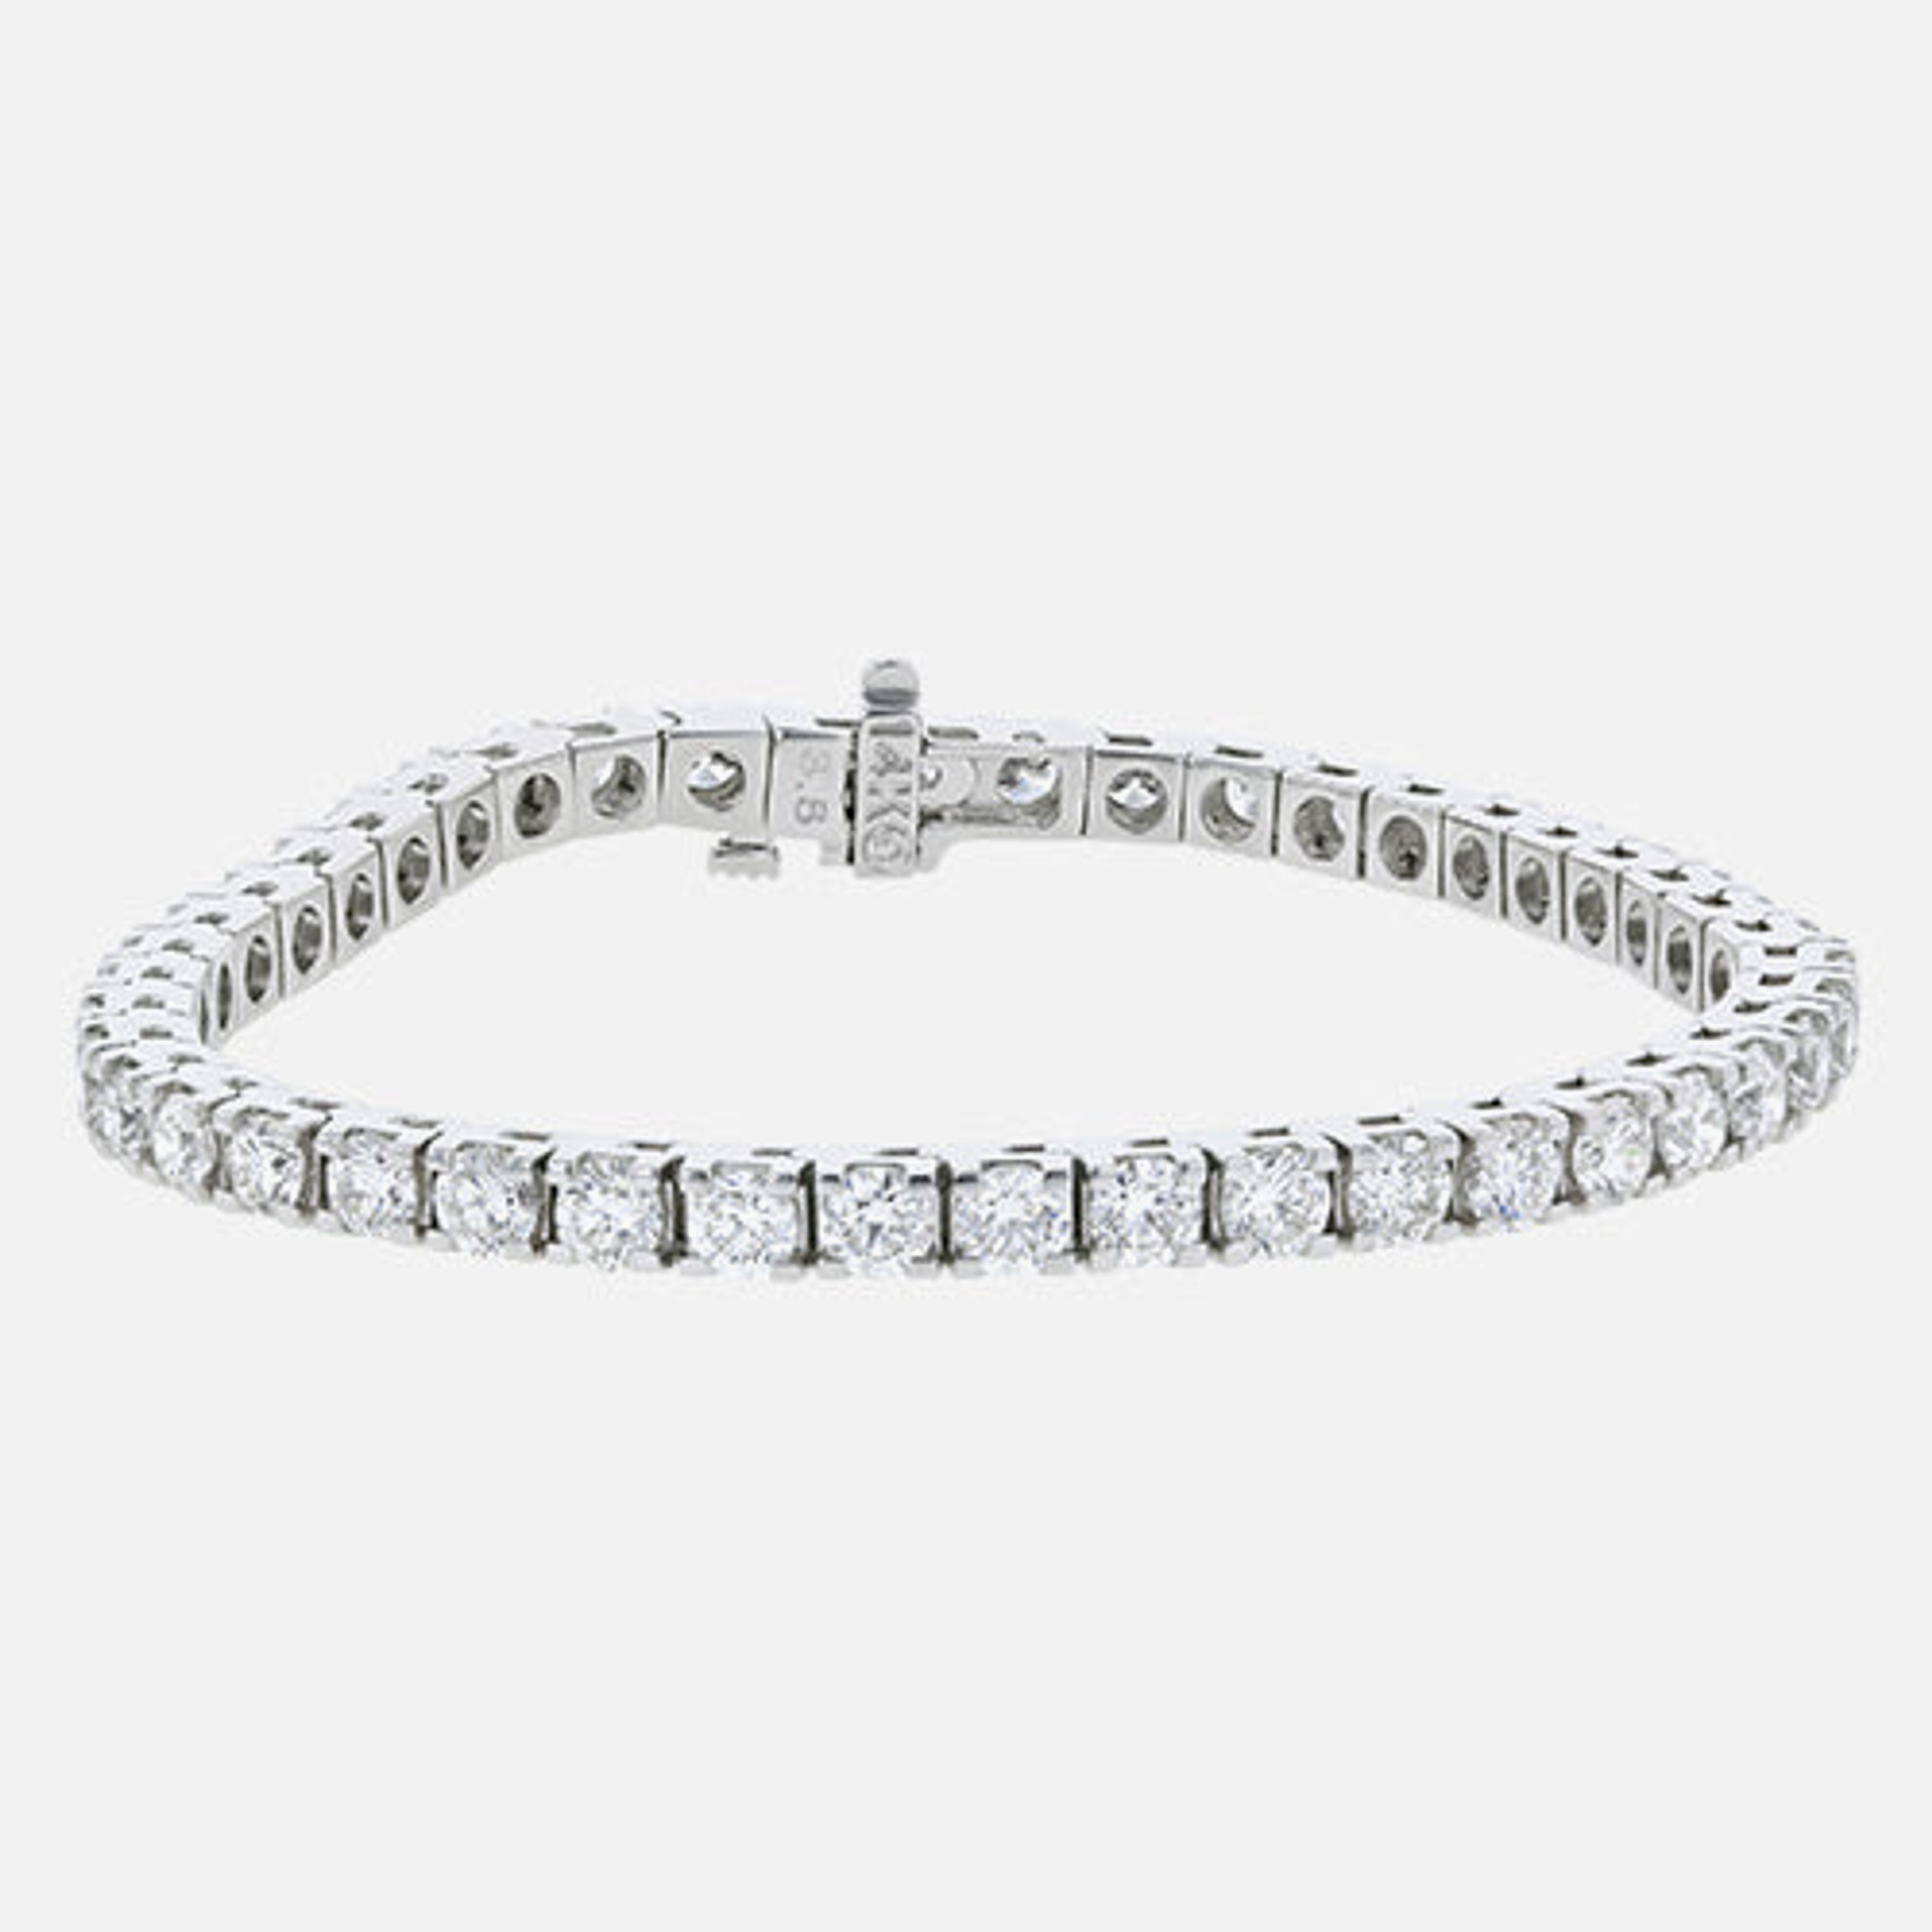 The 7 Carat Diamond Tennis Bracelet